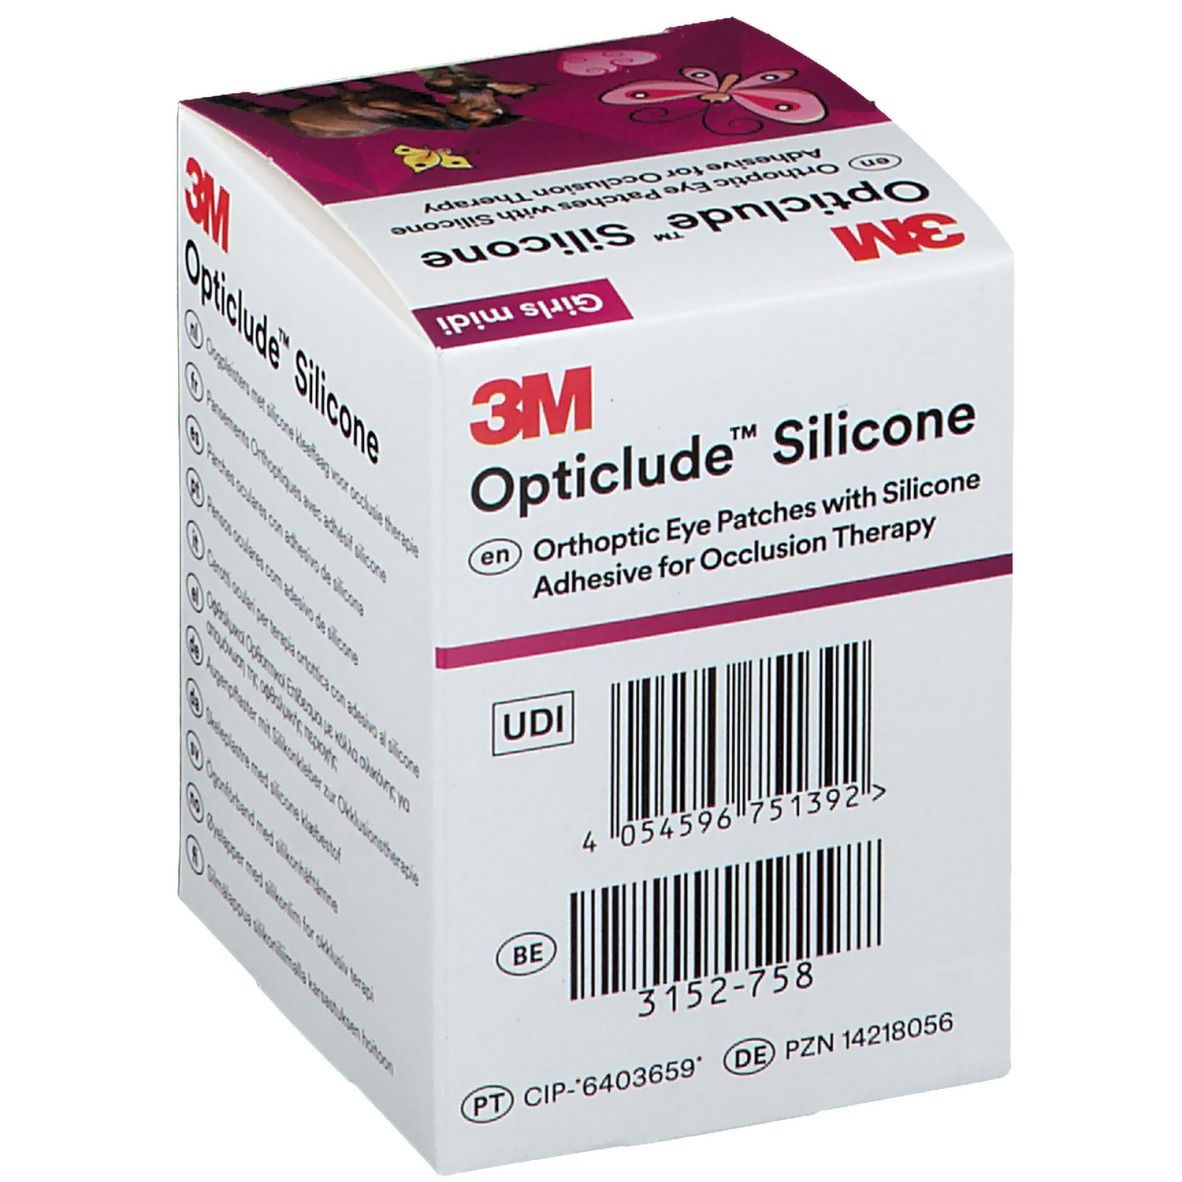 3M™ Opticlude™ Silicone Girl Midi 5,3 x 7,0 cm